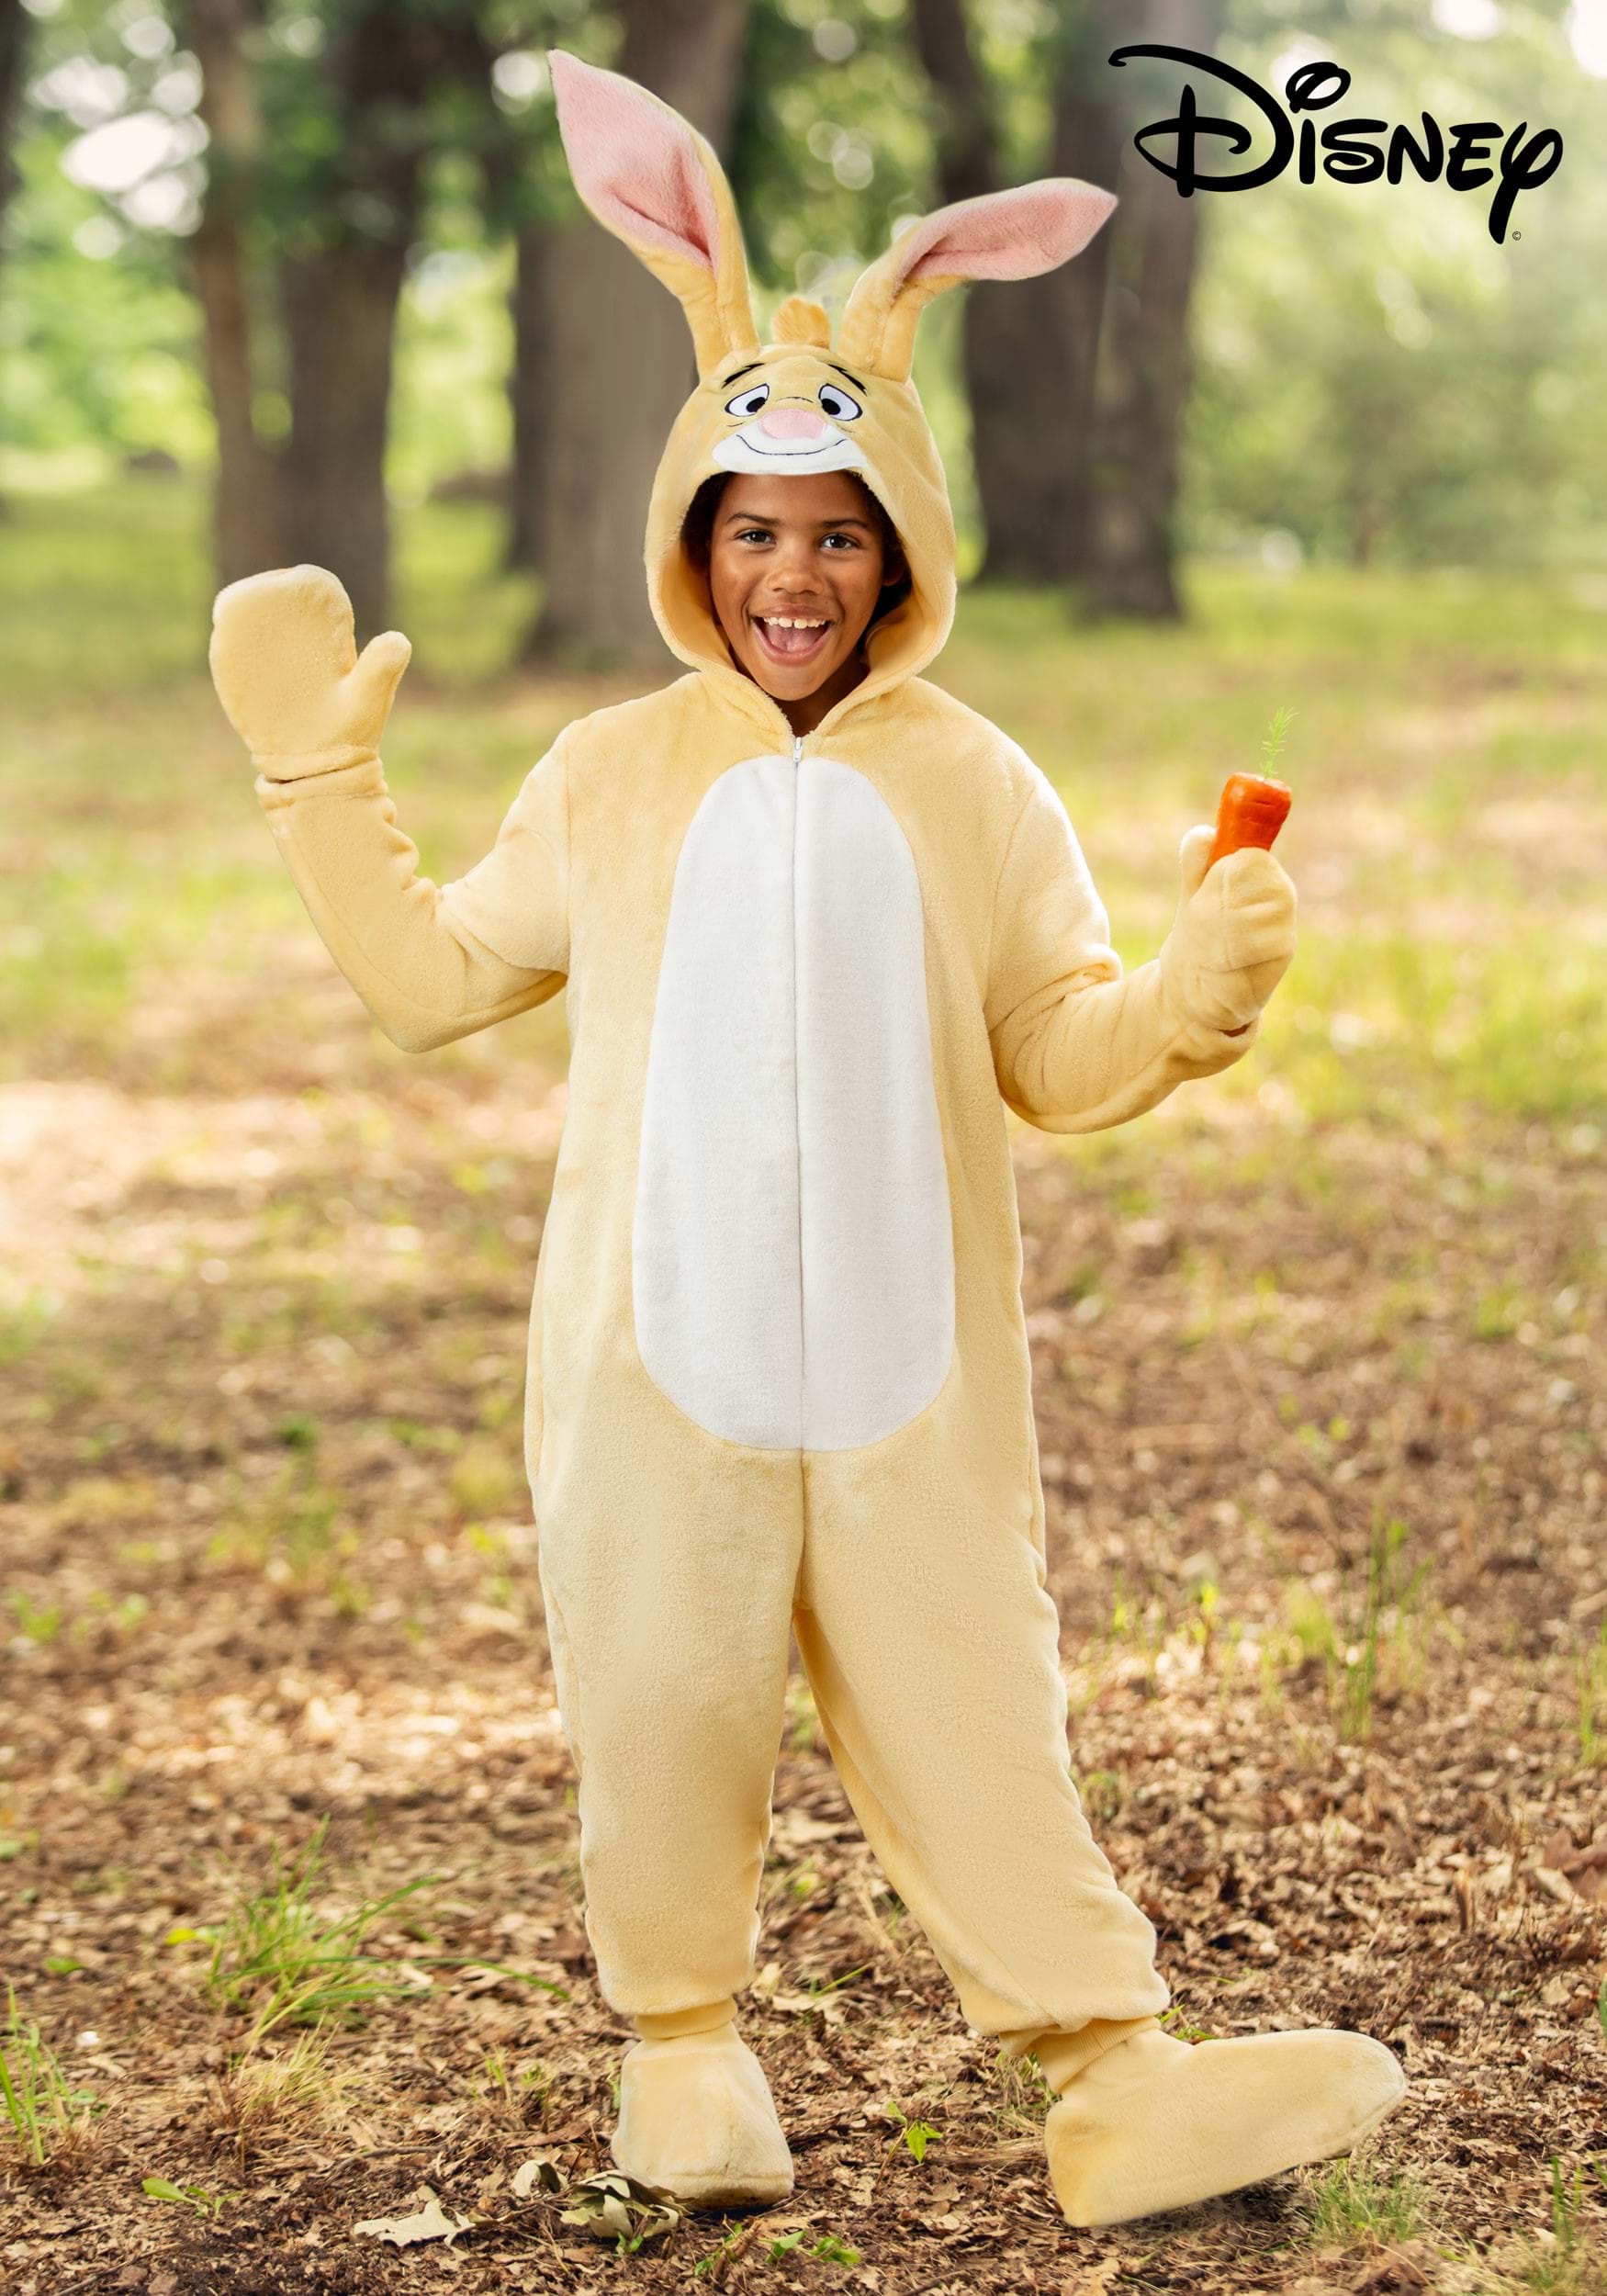 https://images.halloweencostumes.com/products/84558/1-1/deluxe-disney-rabbit-costume-for-kids-update.jpg